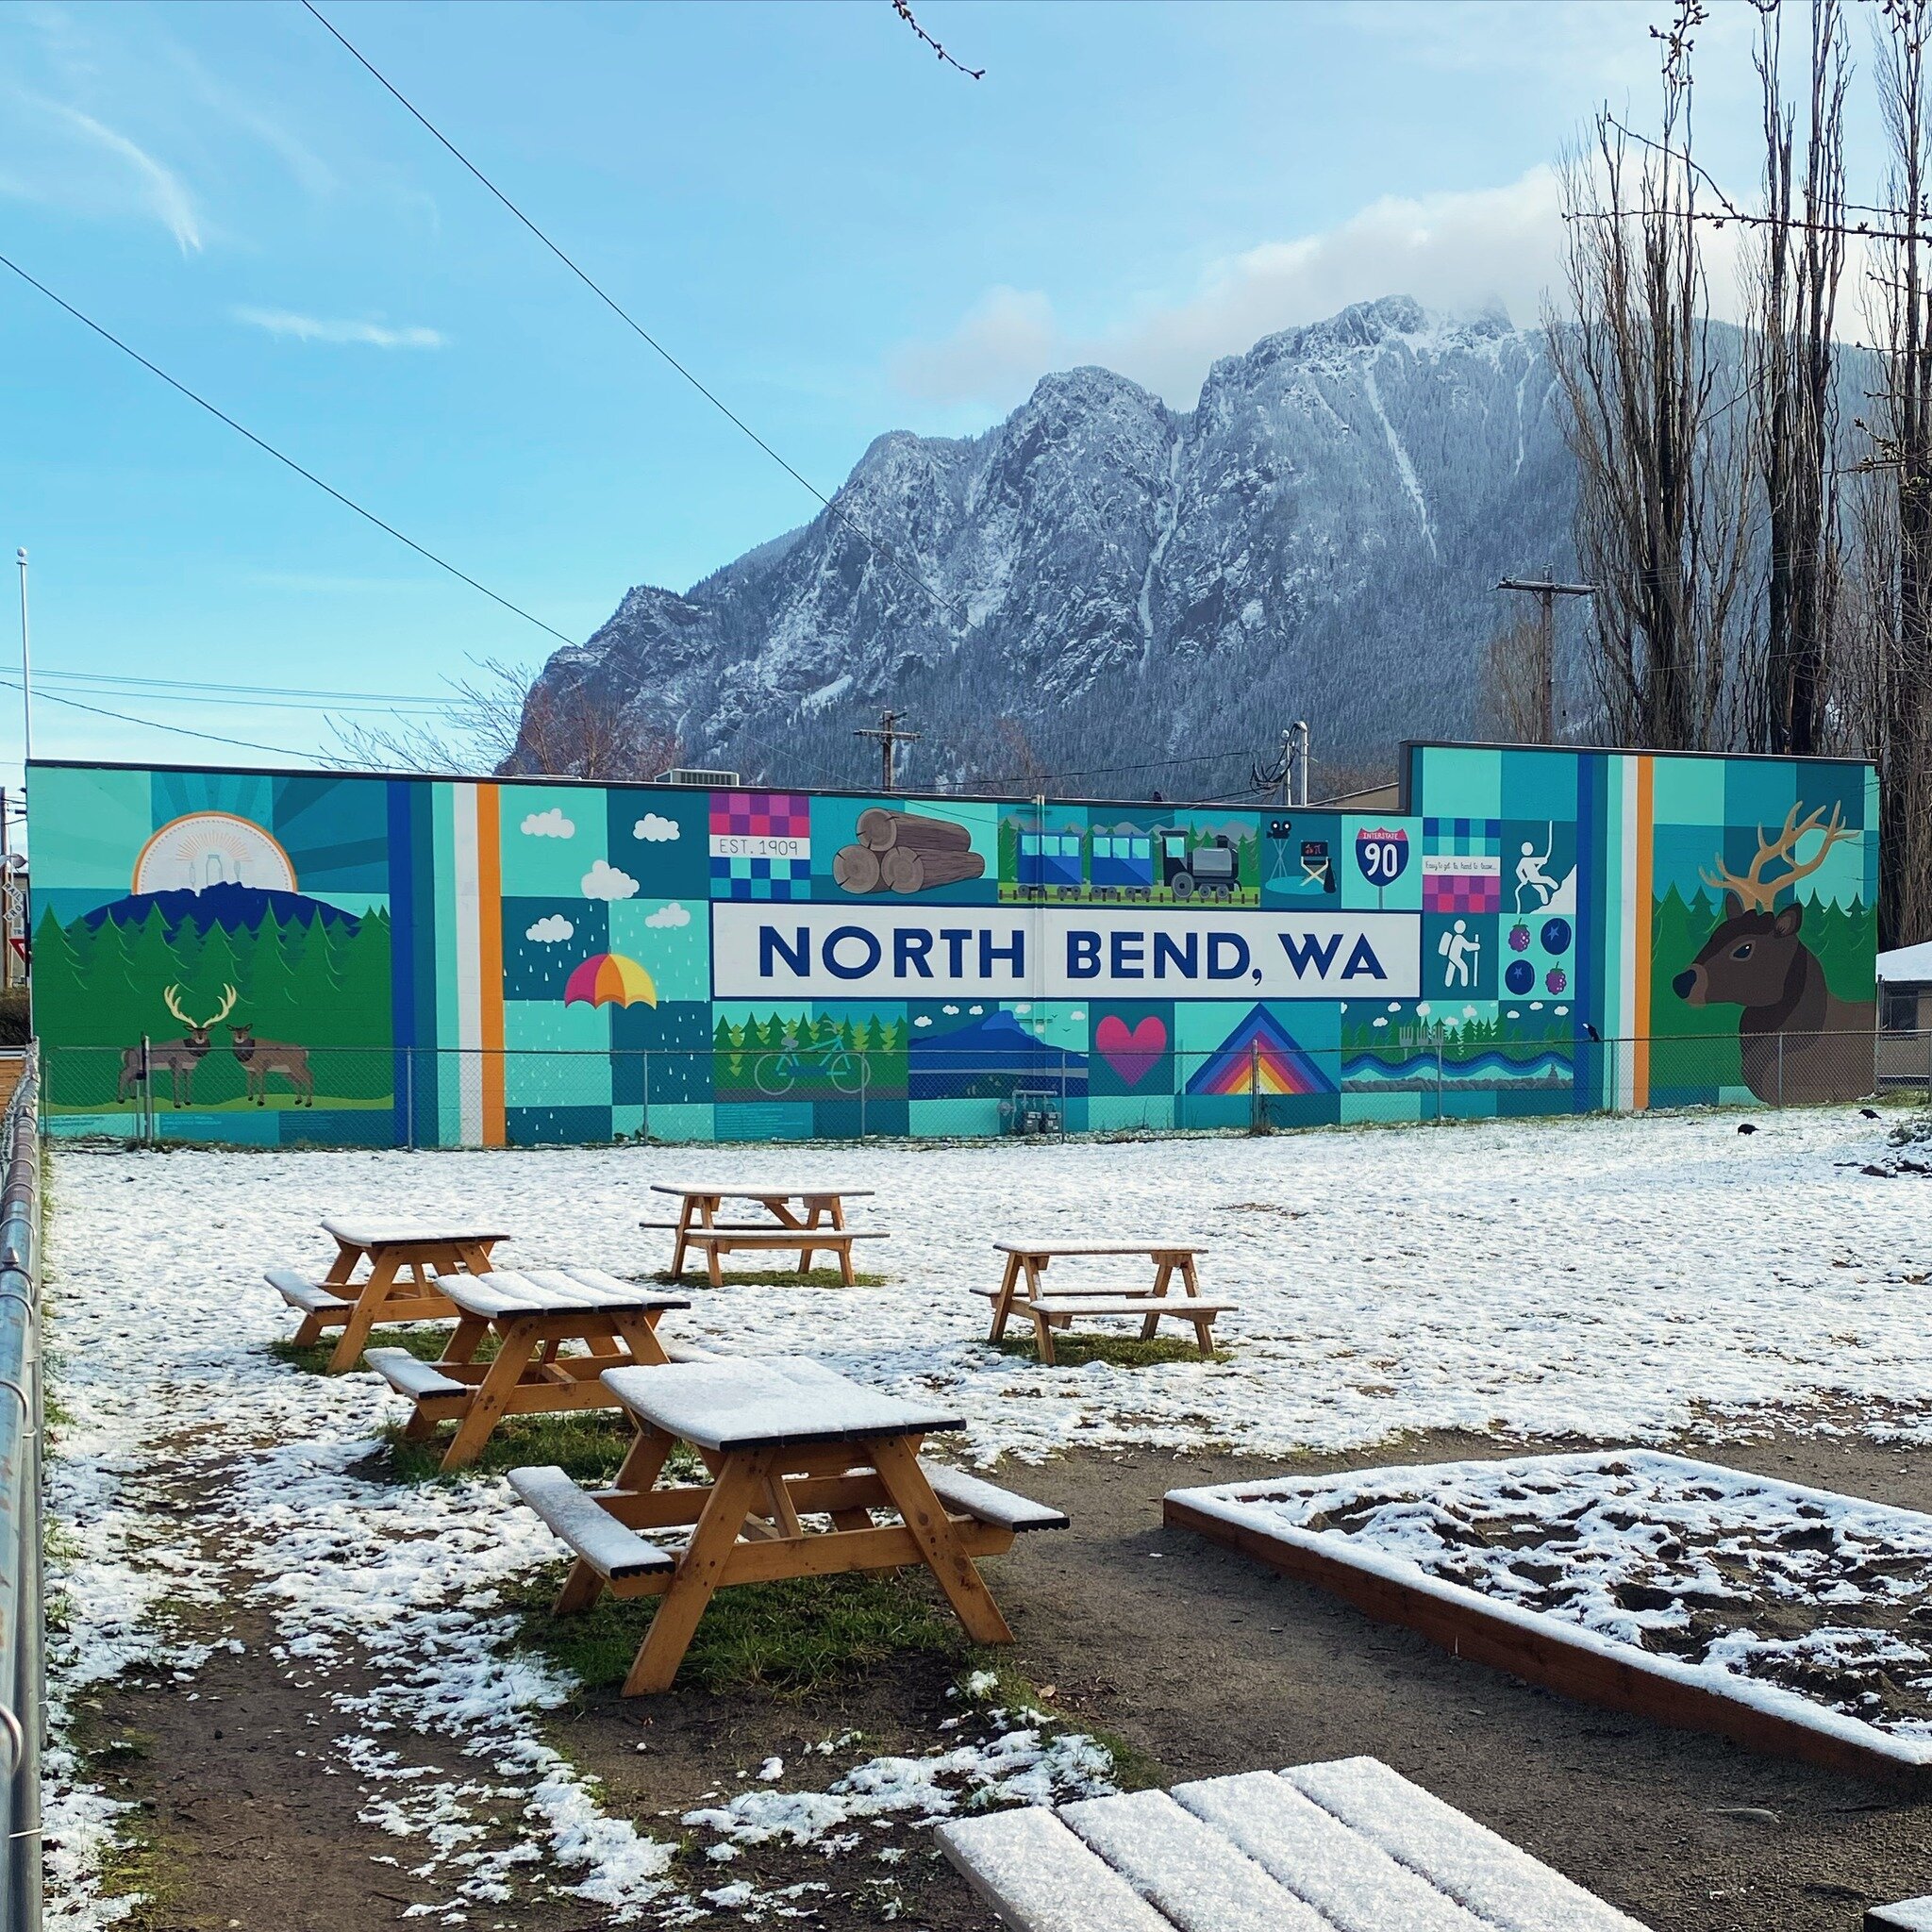 Snowy morning in North Bend 🩵
.
#northbendmural #snowymorning #mtsi #snowymountain #mural #northbendwa #snovalleylife #publicart #muralpainting